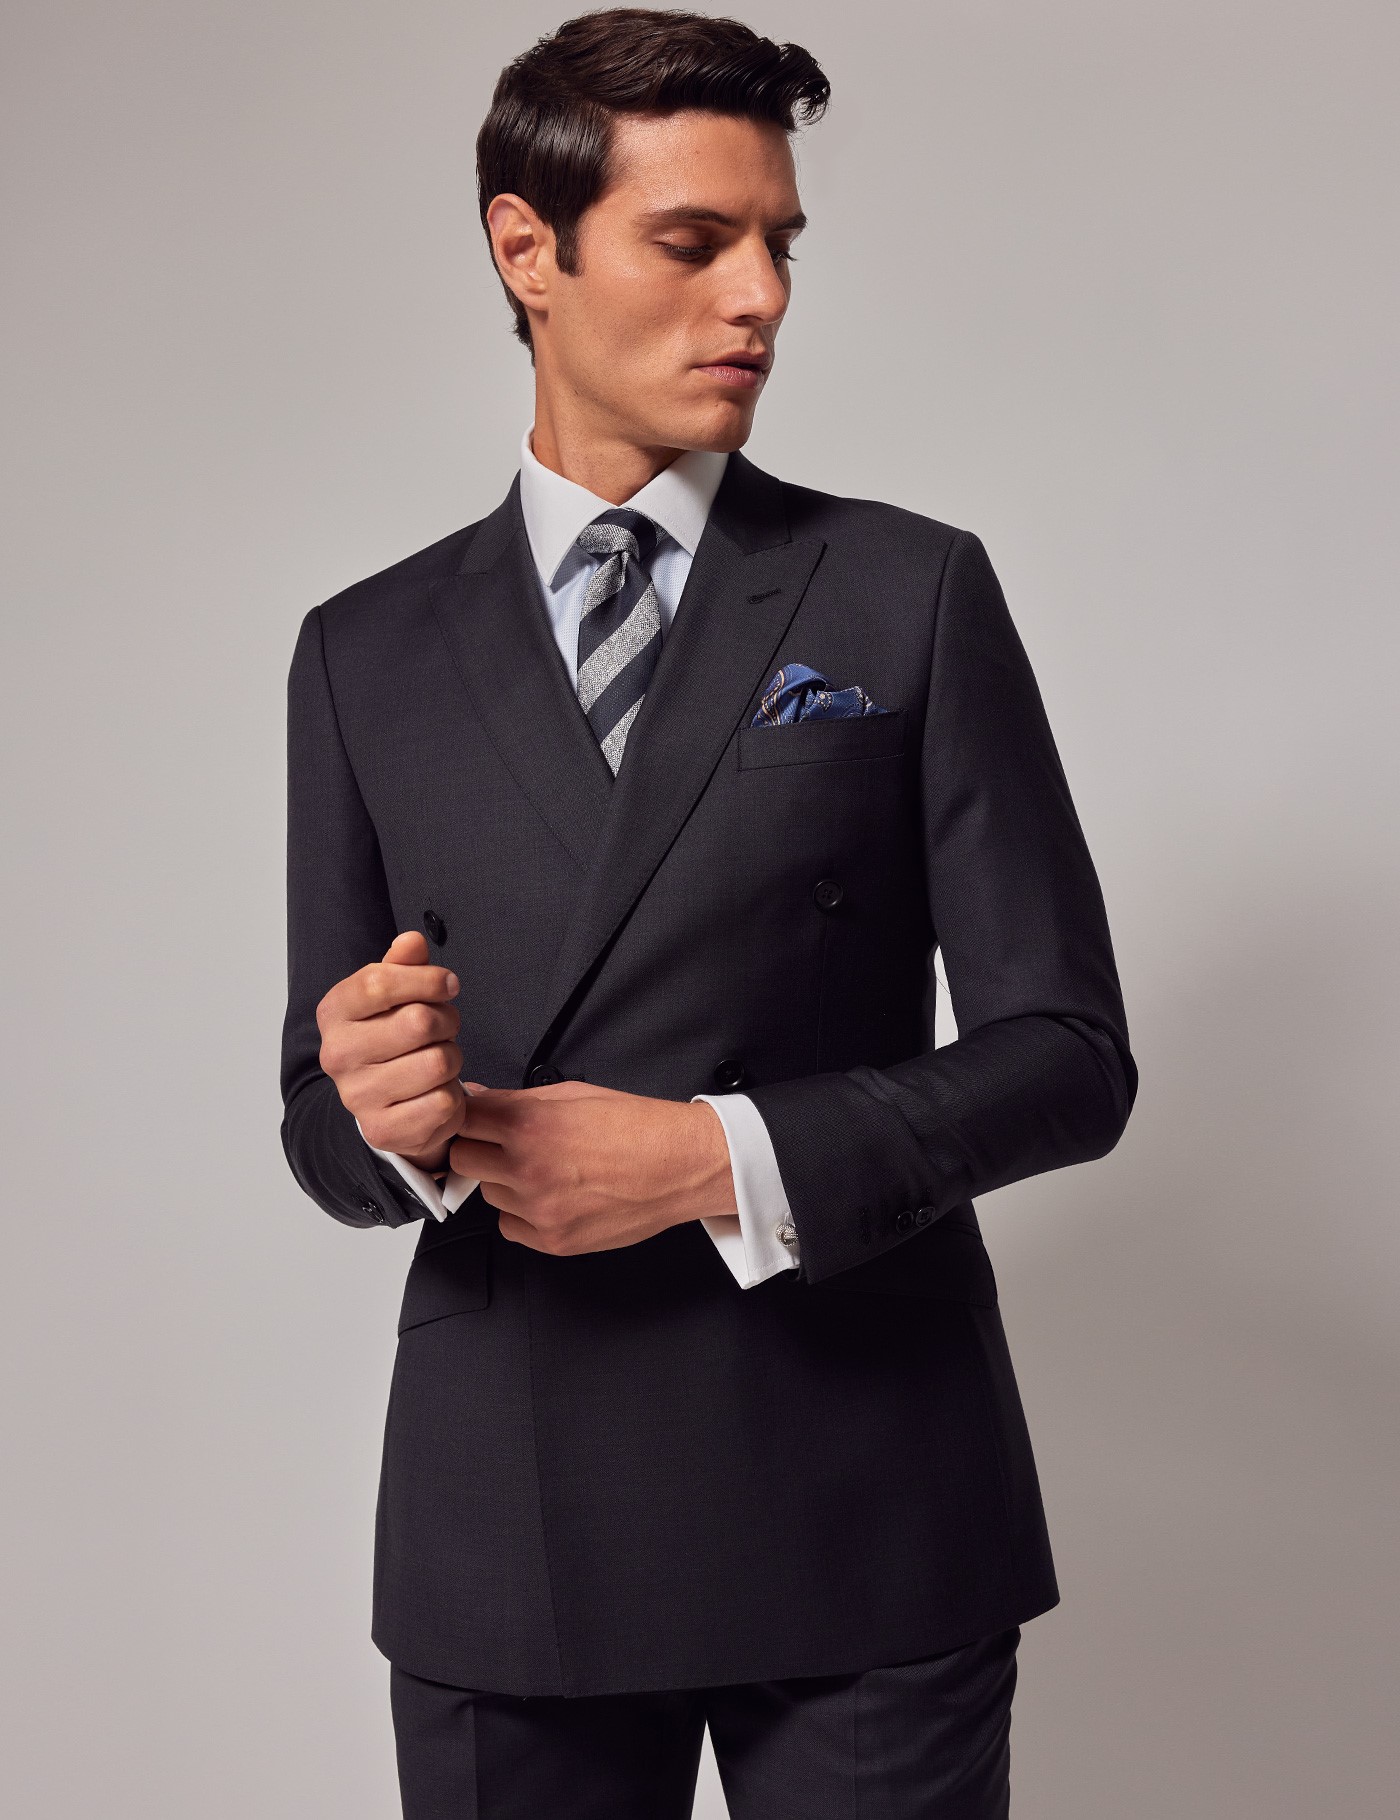 Modern Fit v. Slim Fit Suits + Tuxes, Blog